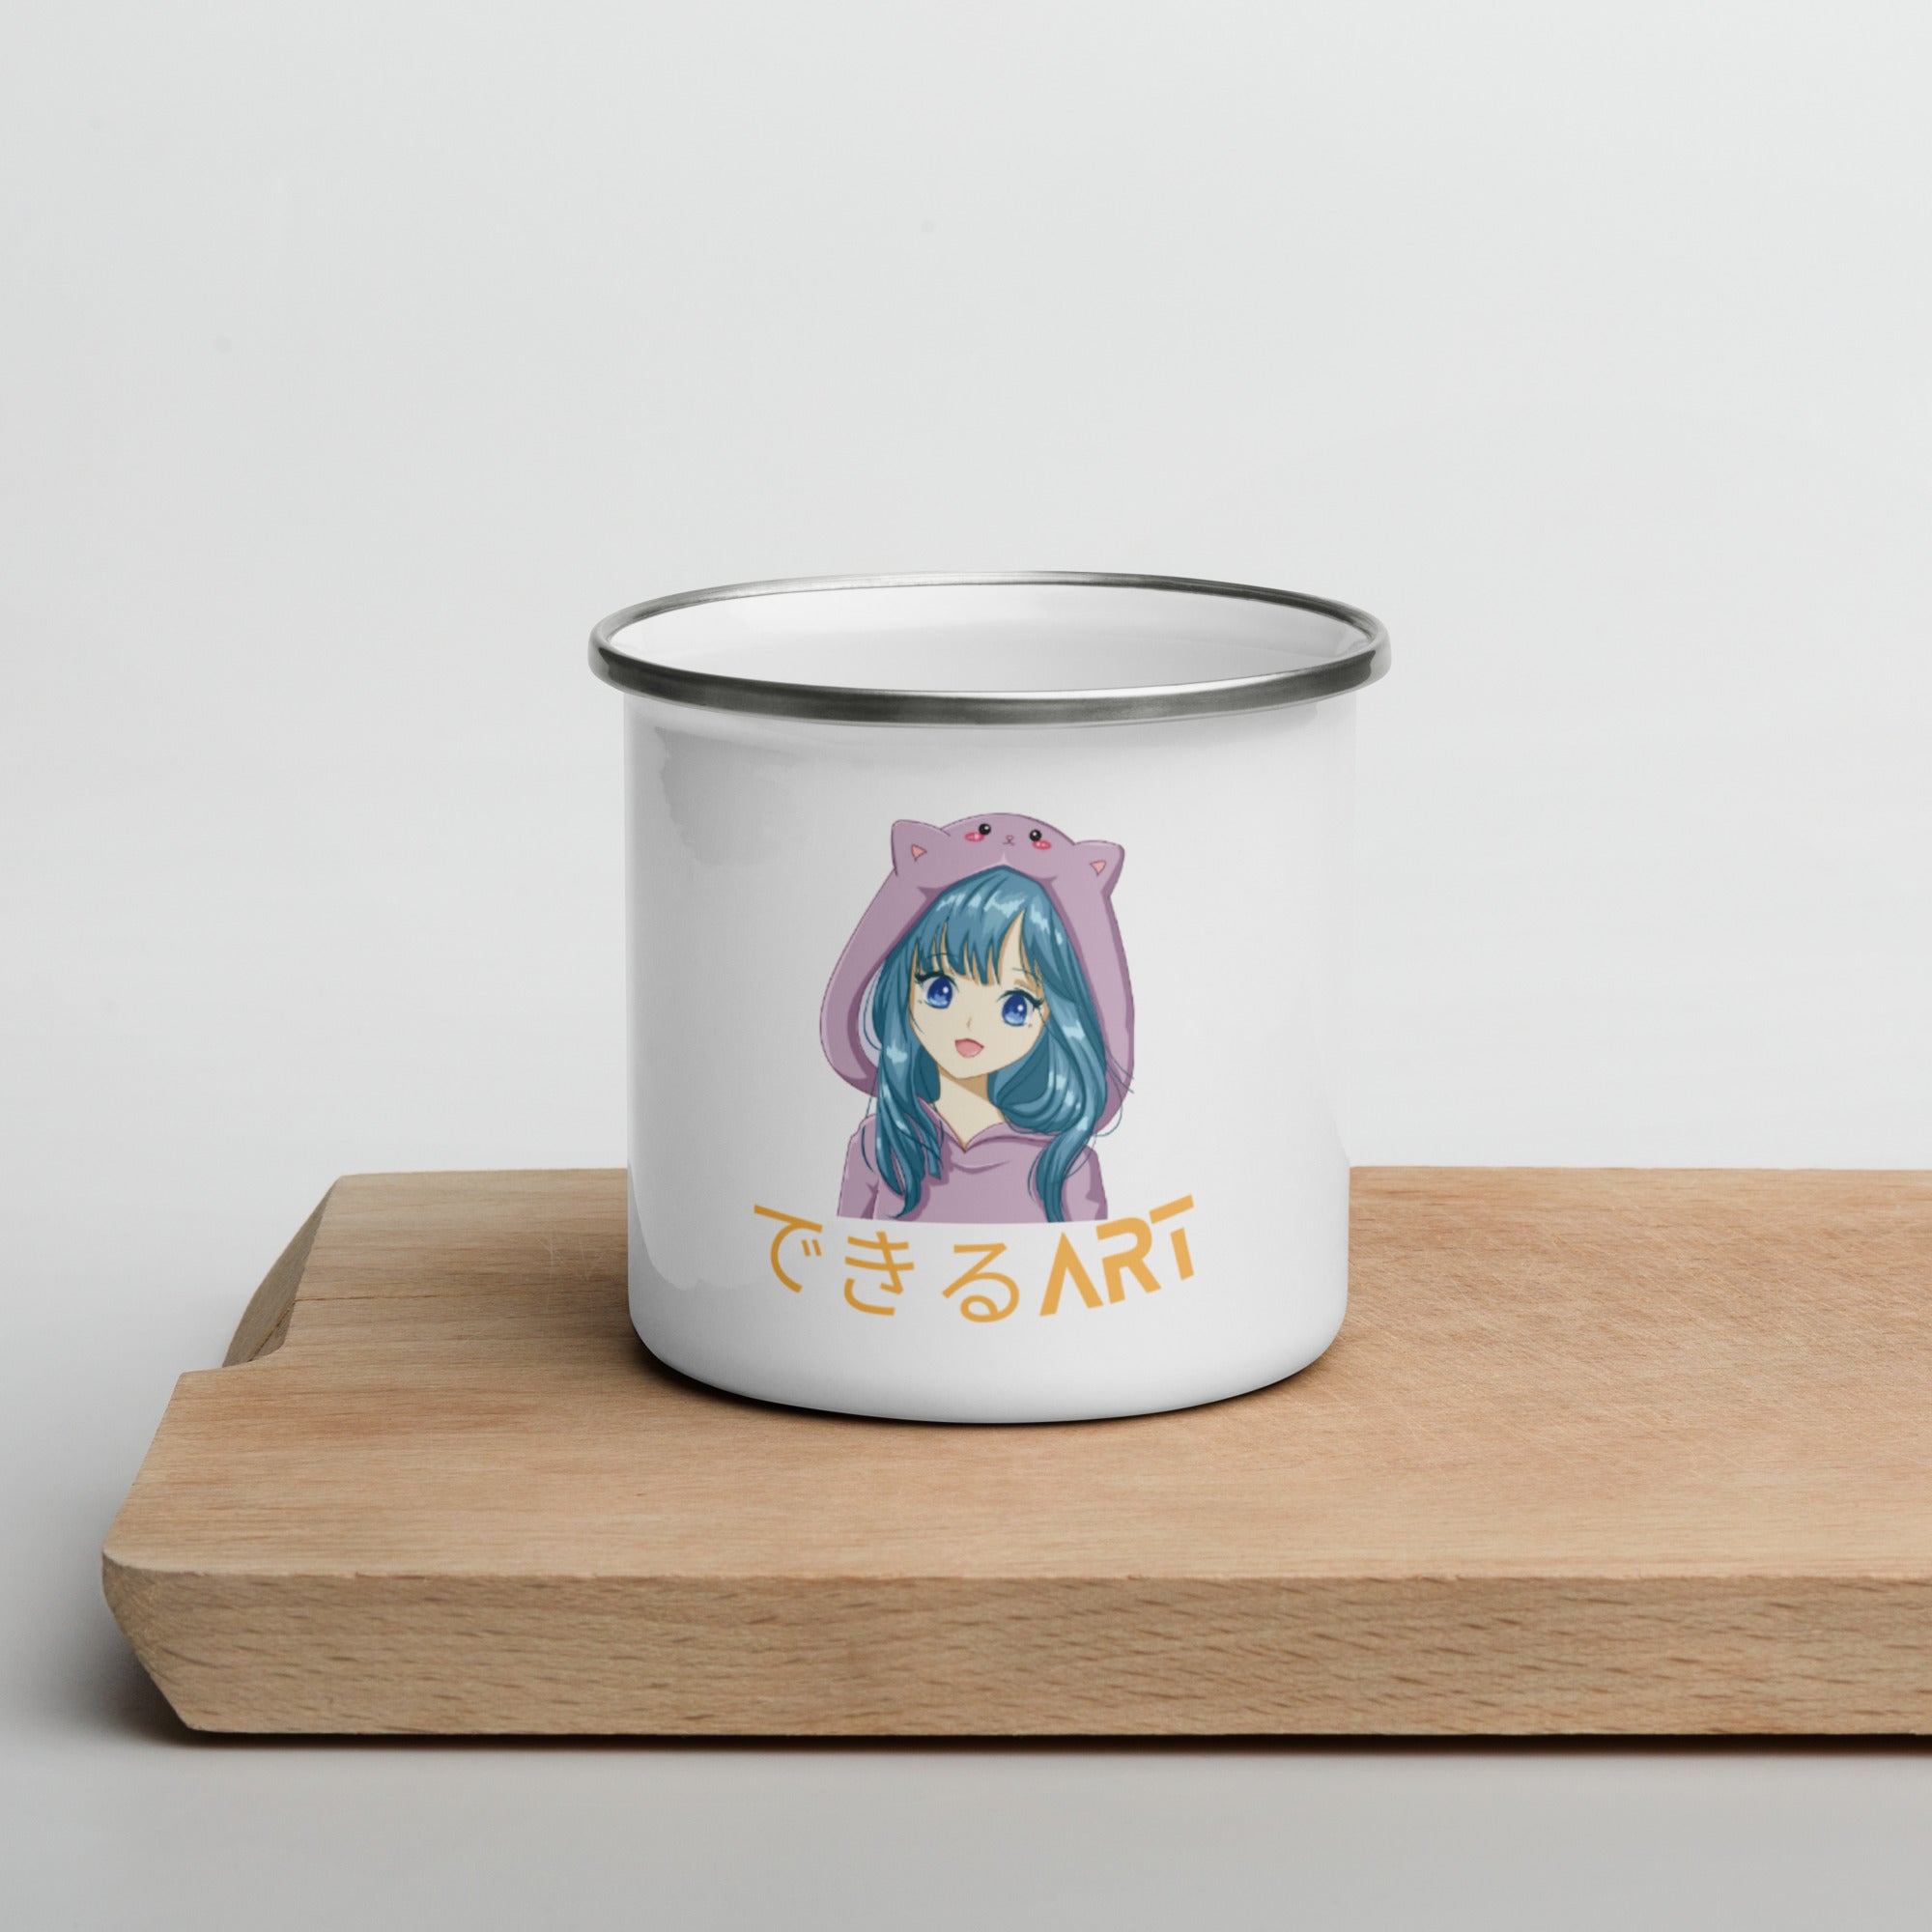 Anime Meme Double-Sided Mug: Notice Me Senpai/Noticed Me - Nani?Wear